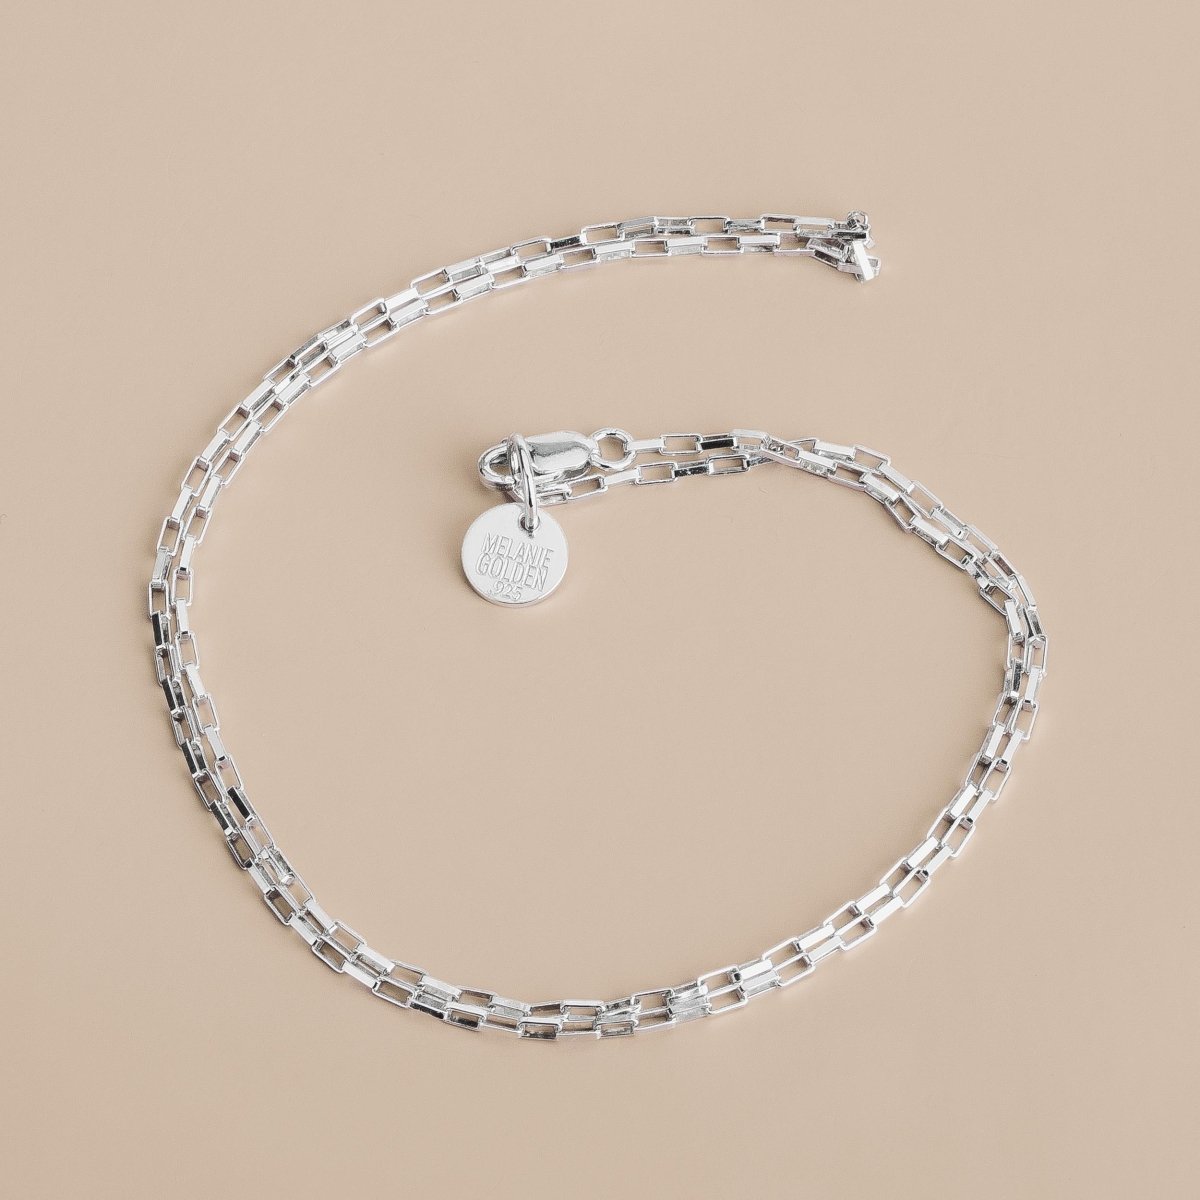 Box Chain Bracelet - Melanie Golden Jewelry - bracelet, bracelets, everyday